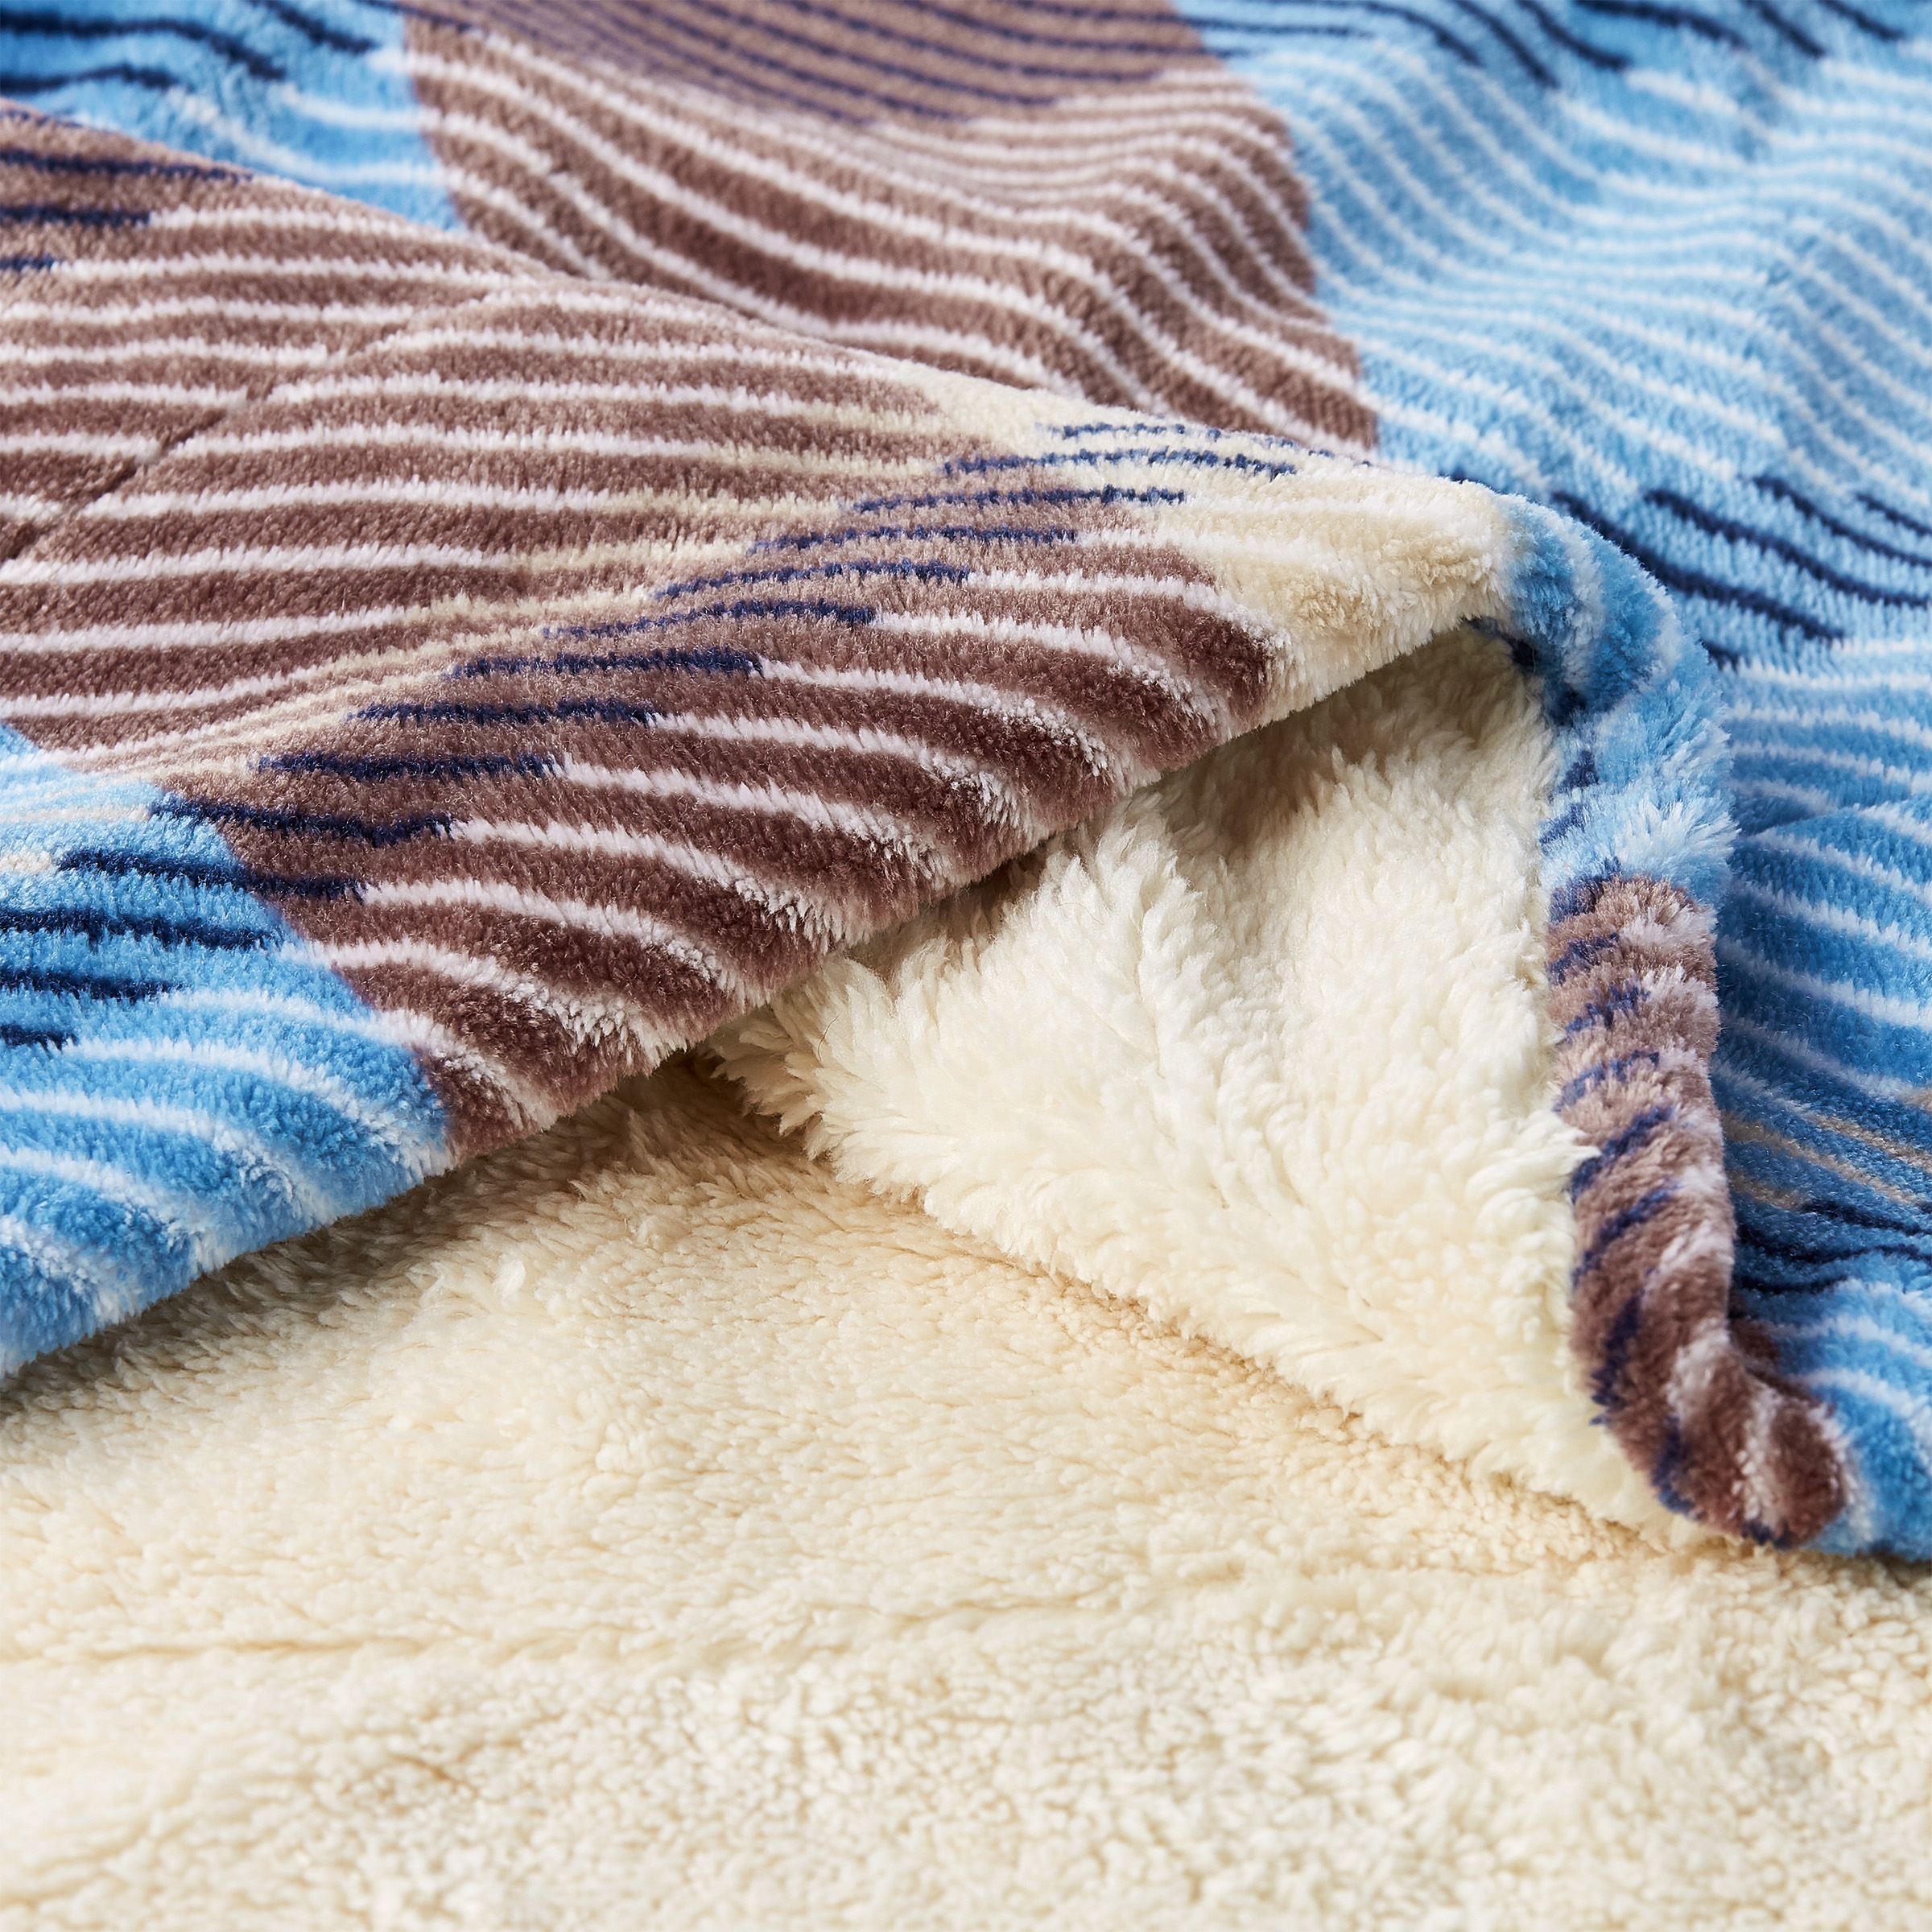 XL Oversized Throw Blanket Softest Fuzziest Most Wonderful Feel 2 Sided Adult Woobie Great Gift - Blue Dusk